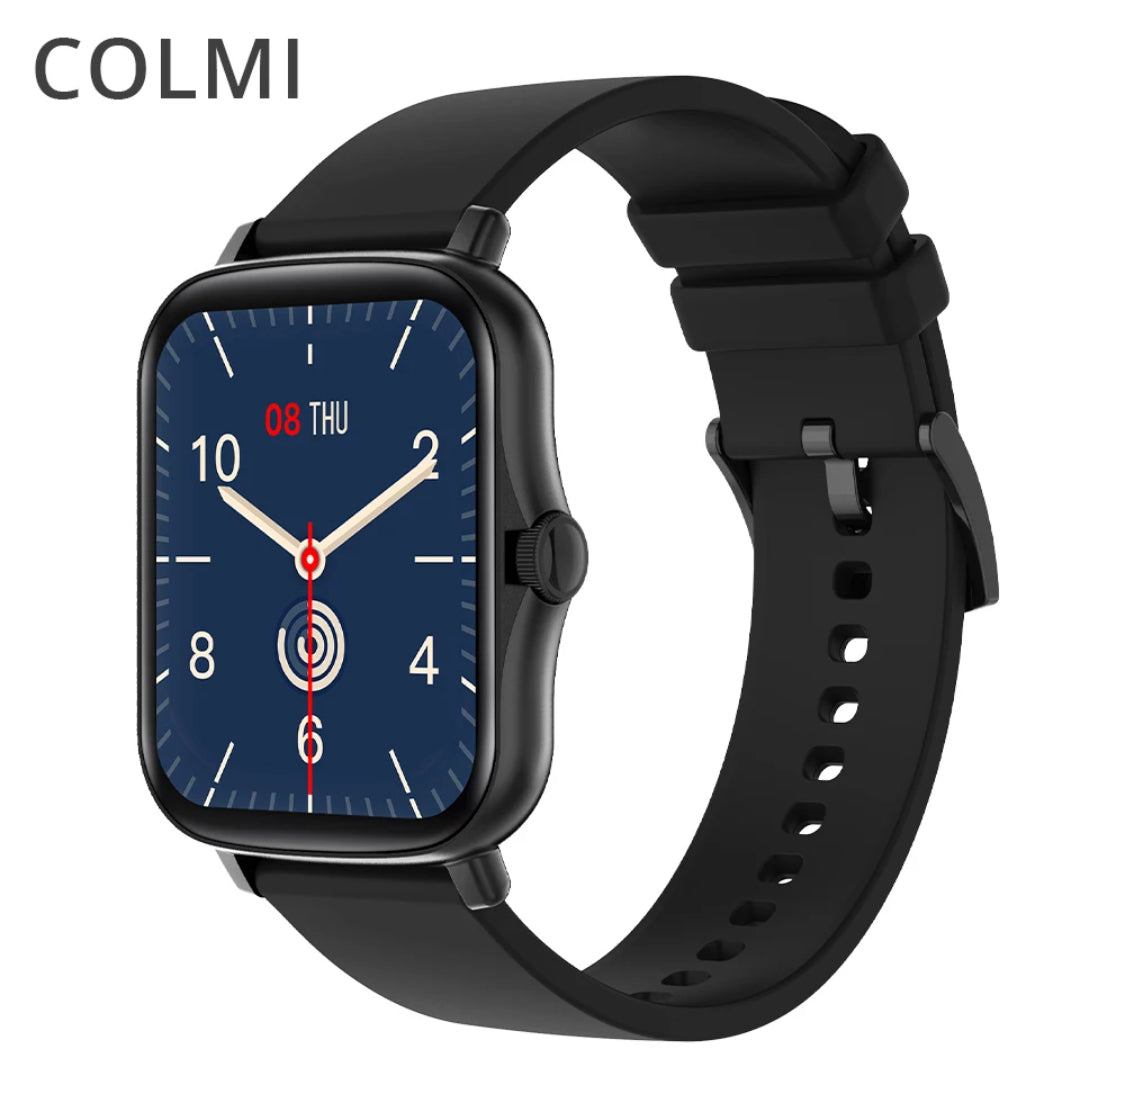 COLMI P8 Plus Smart Watch - Smart Watch South Africa 